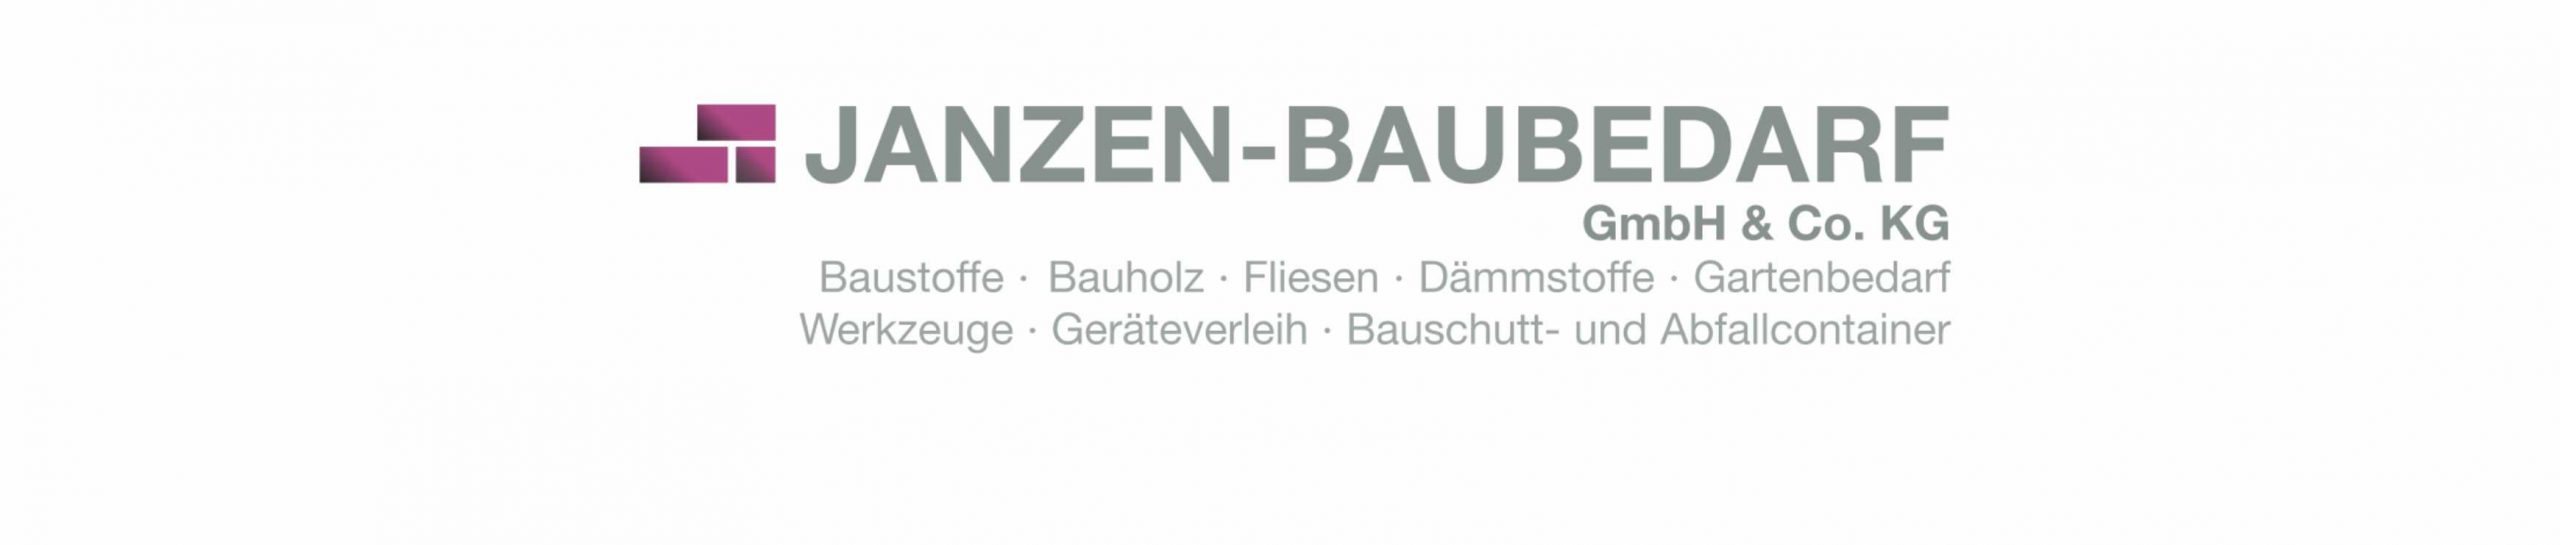 JANZEN-BAUBEDARF GmbH & Co. KG